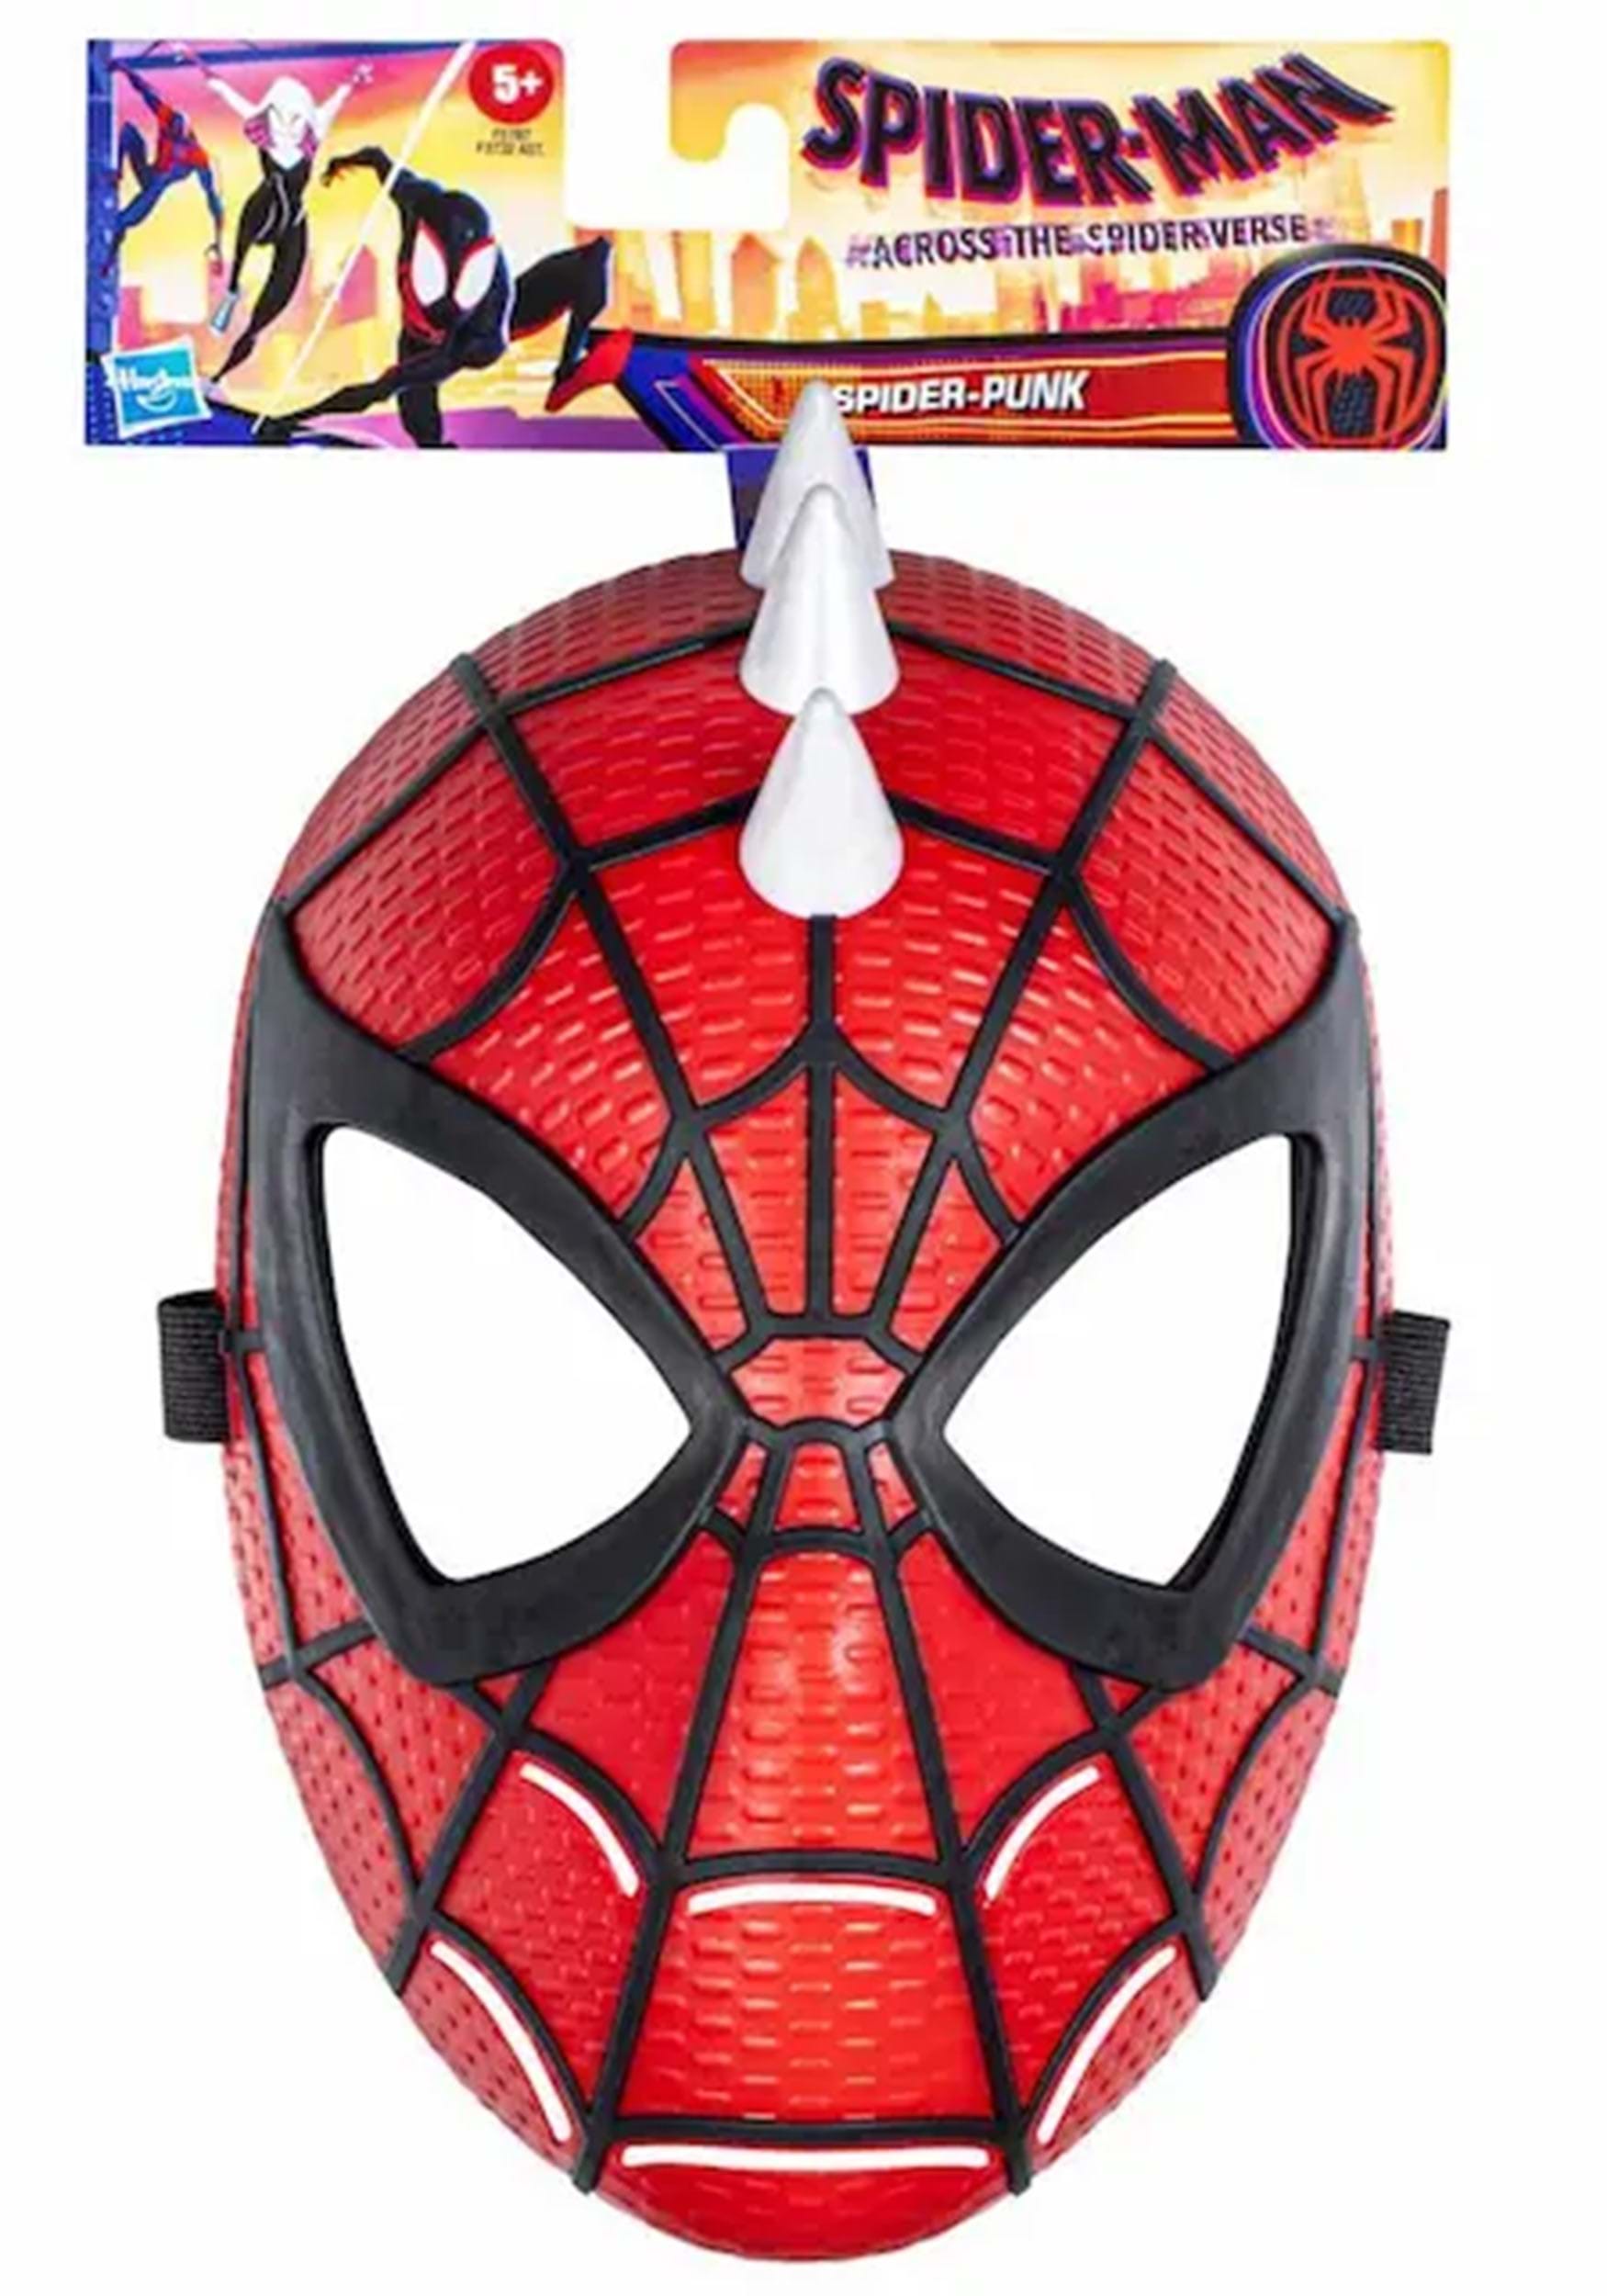 Spider-Man Spider-Punk Mask For Kids